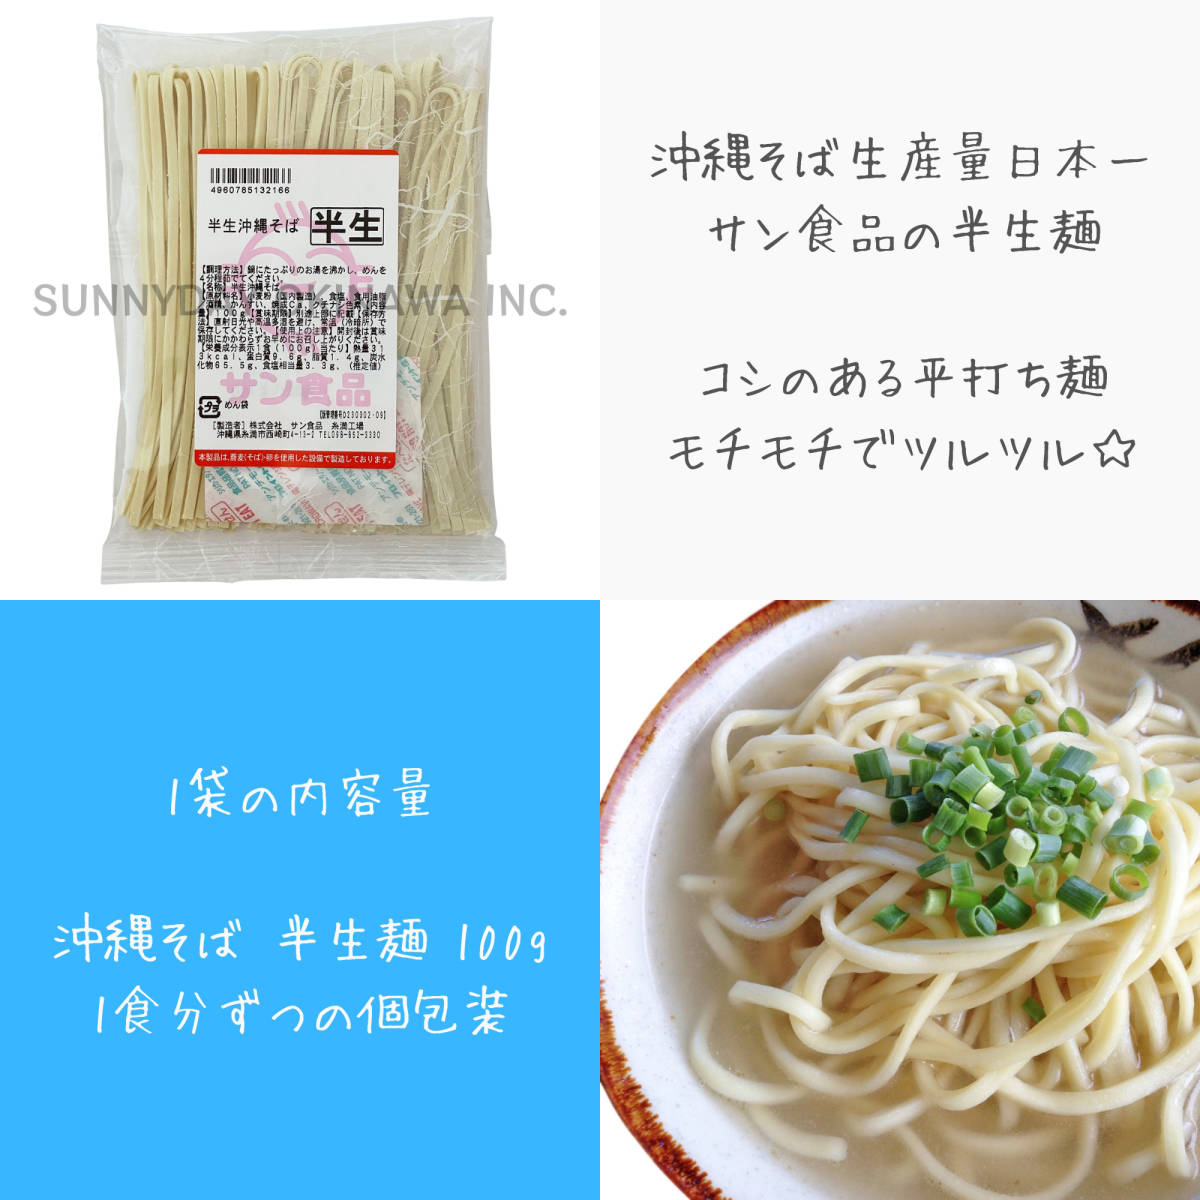  Okinawa соба половина сырой лапша 6 еда свинья . соба суп солнечный еда so-ki рагу рафуте . земля производство ваш заказ 